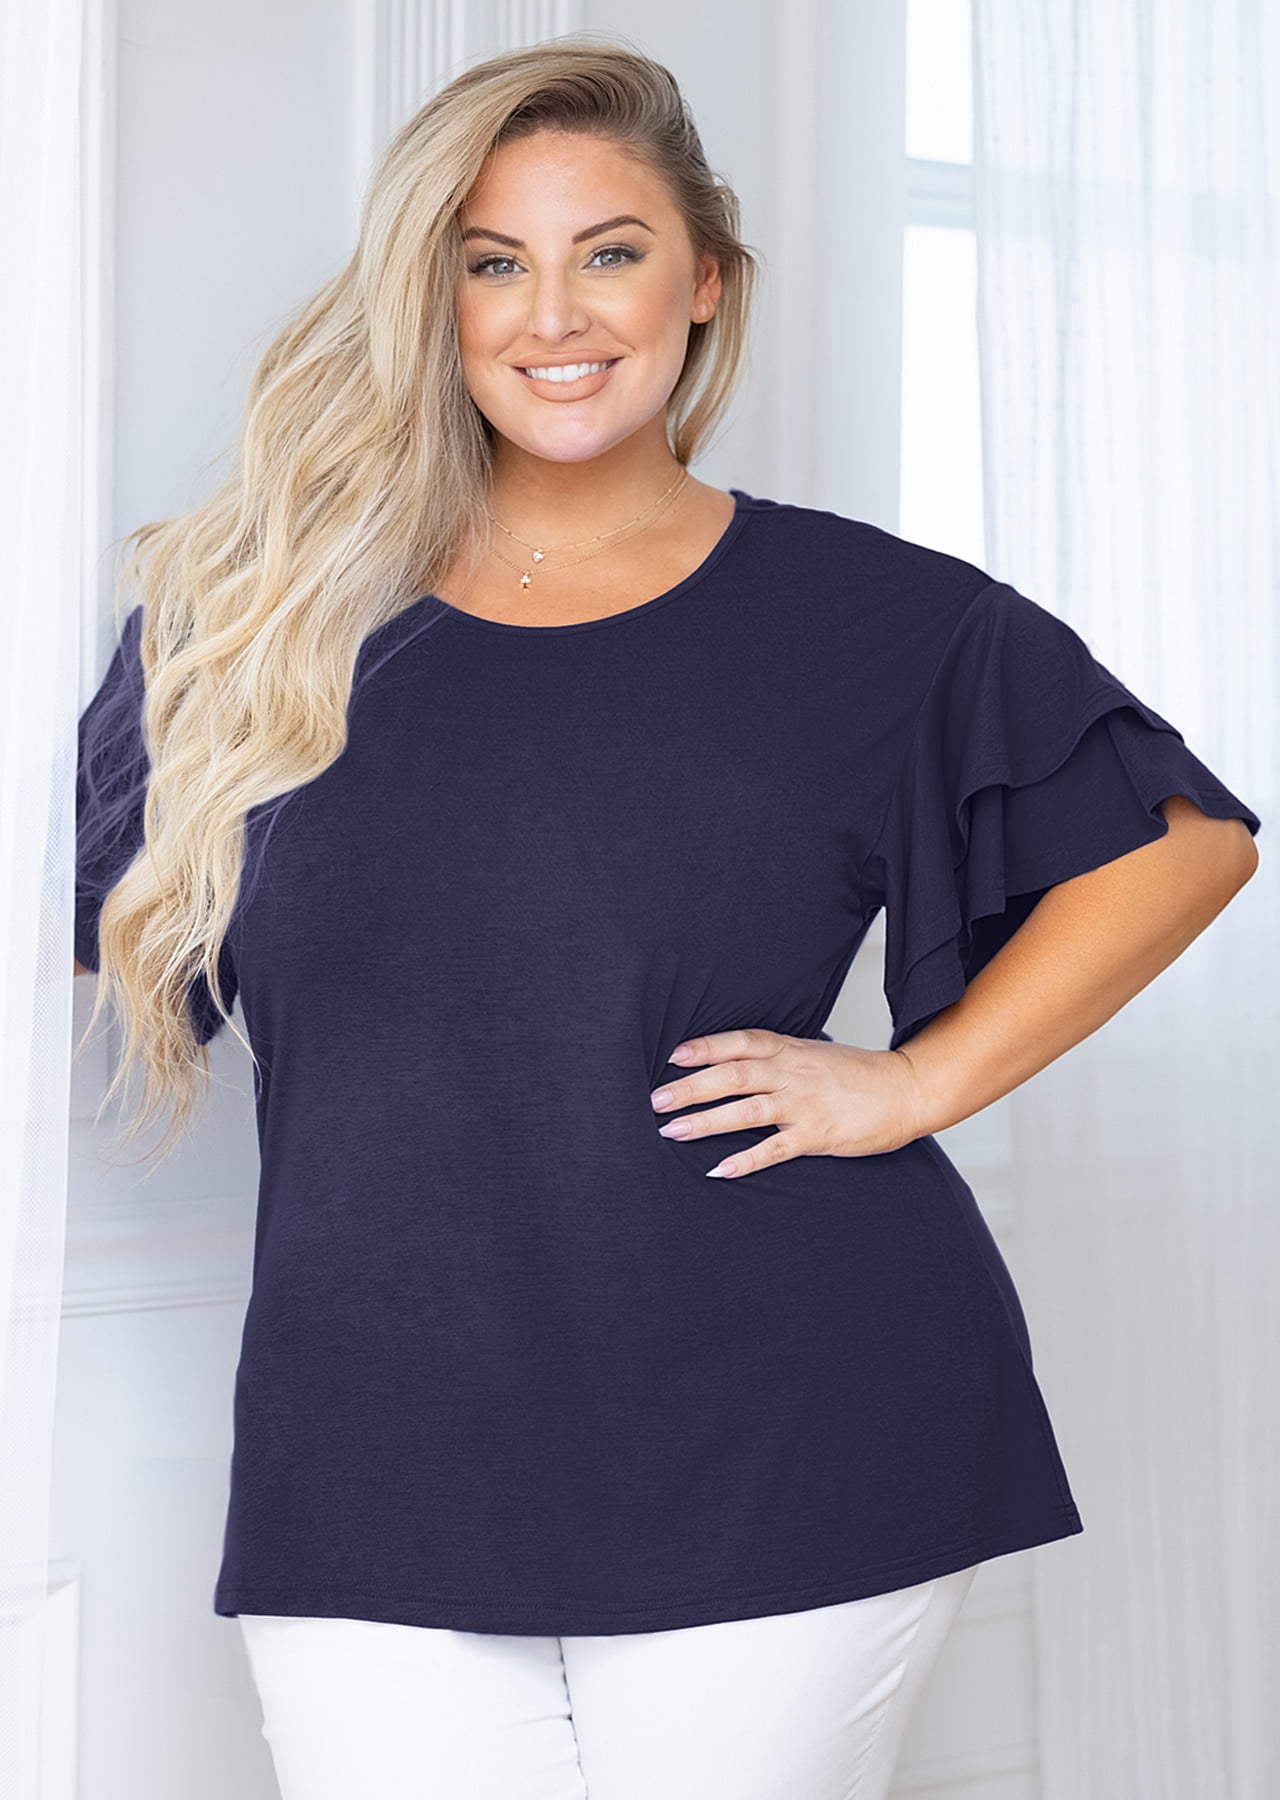 SHOWMALL Women Plus Size Tops Short Sleeve Tunic Side Slit Shirt Summer  V-Neck Blouse Navy Blue 2X Tops